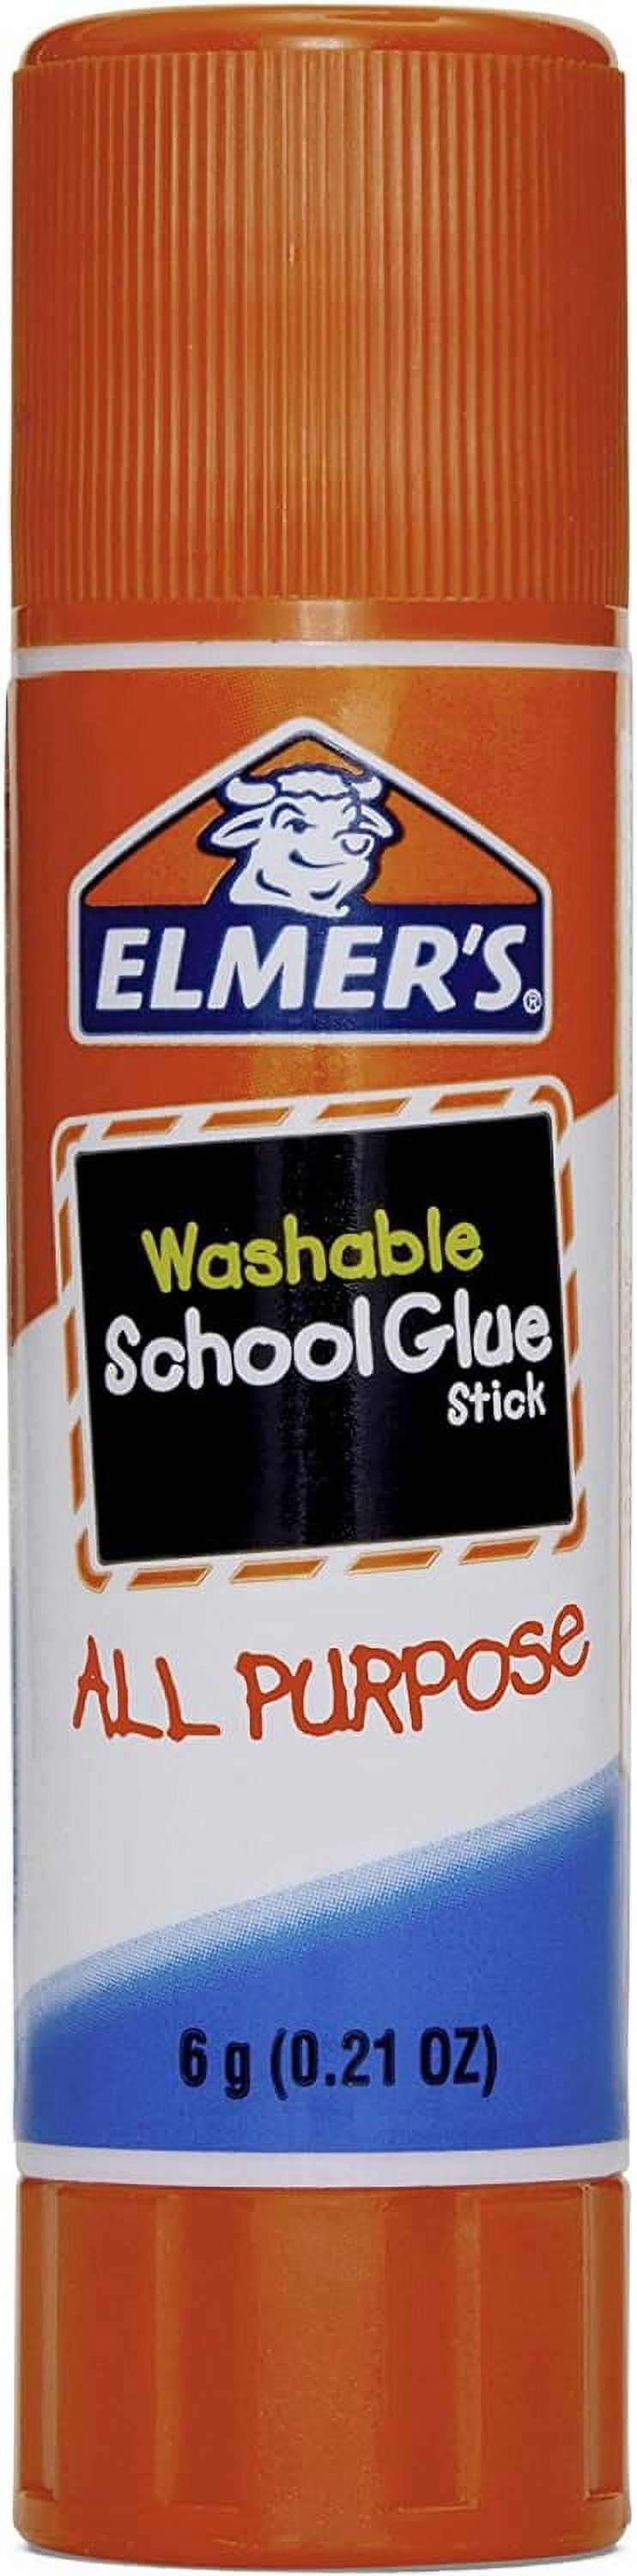 Elmer's Washable School Glue Sticks, All Purpose, 4-pack - ELME542, Sanford Lp - Elmer's